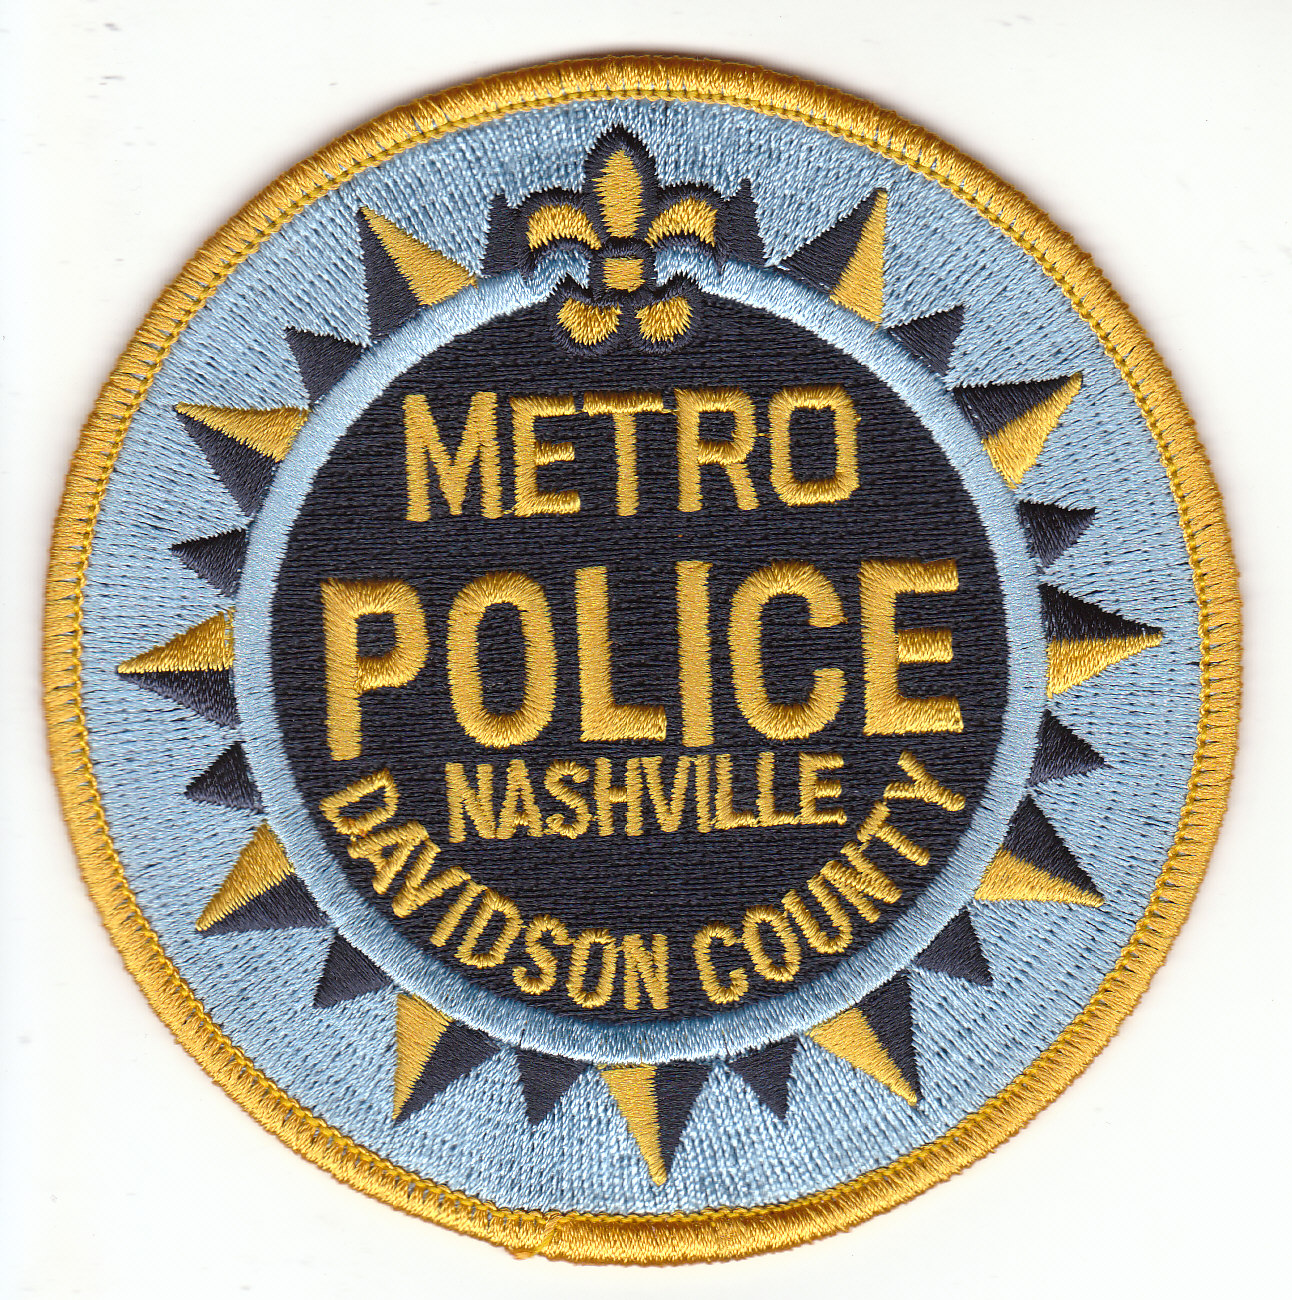 Nashville, TN Police Department Police Motor Units LLC